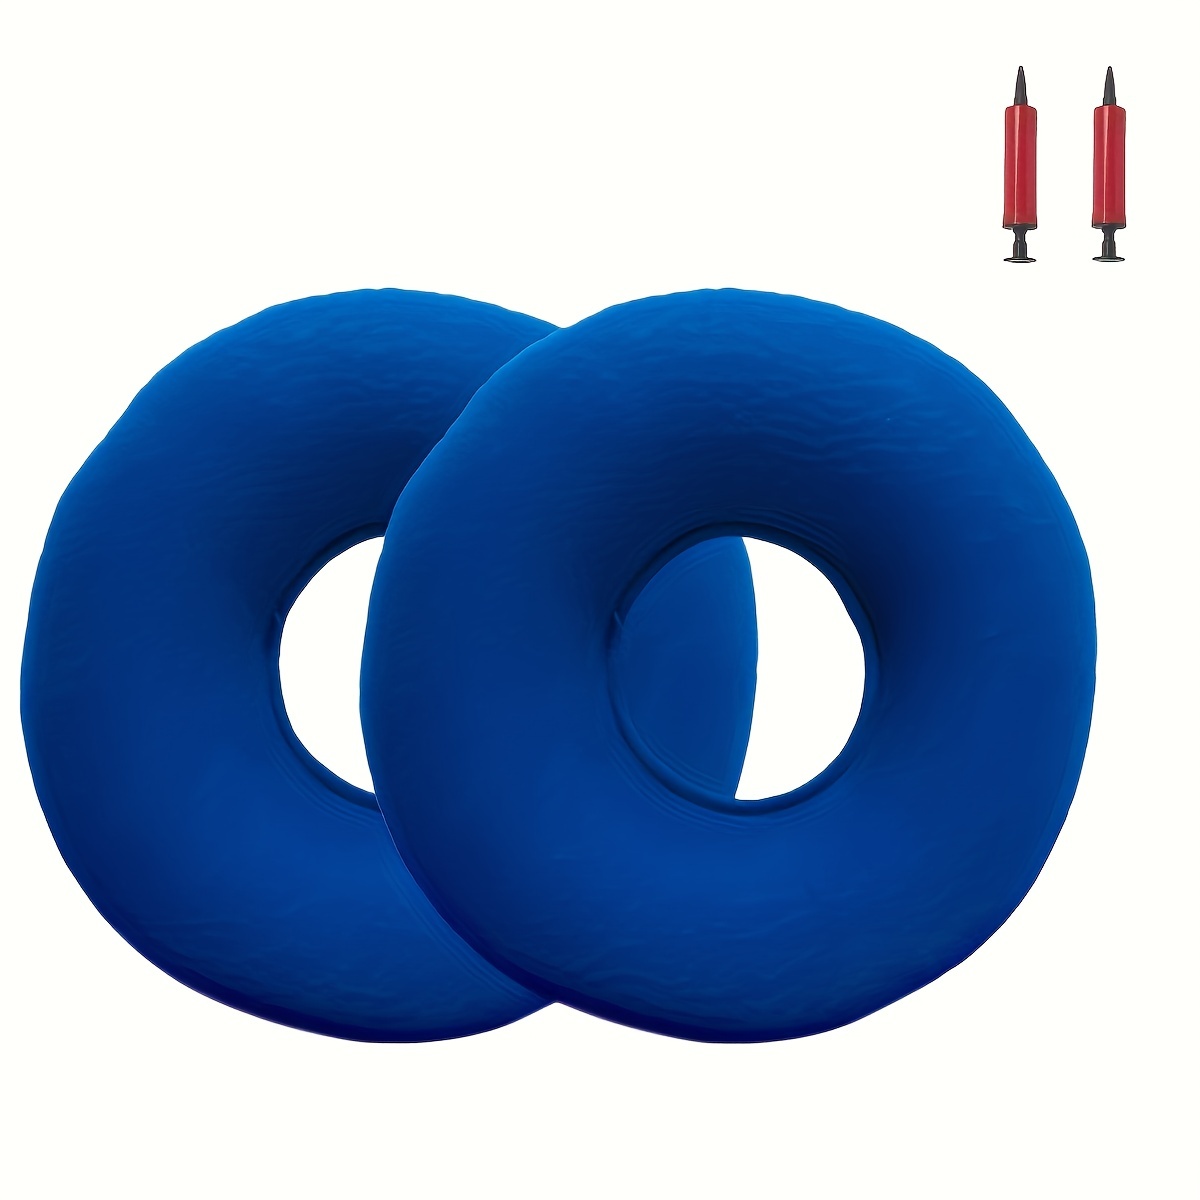 Donut Pillow for Hemorrhoids - Donut Seat Cushion, Tailbone Pain